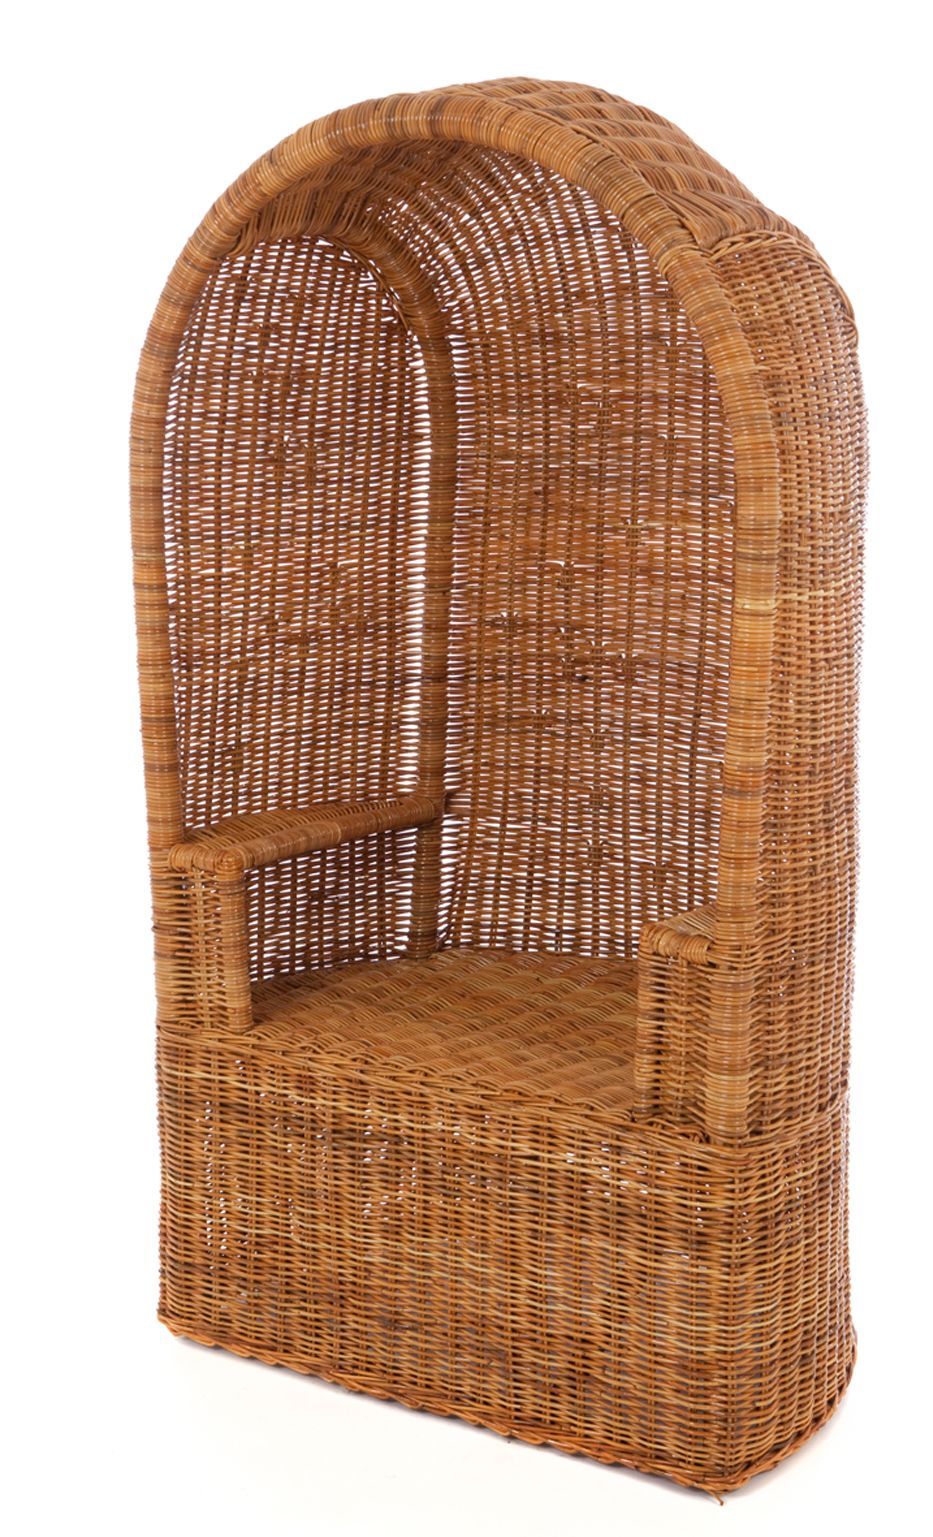 Wicker, Furniture, Chair, Basket, 